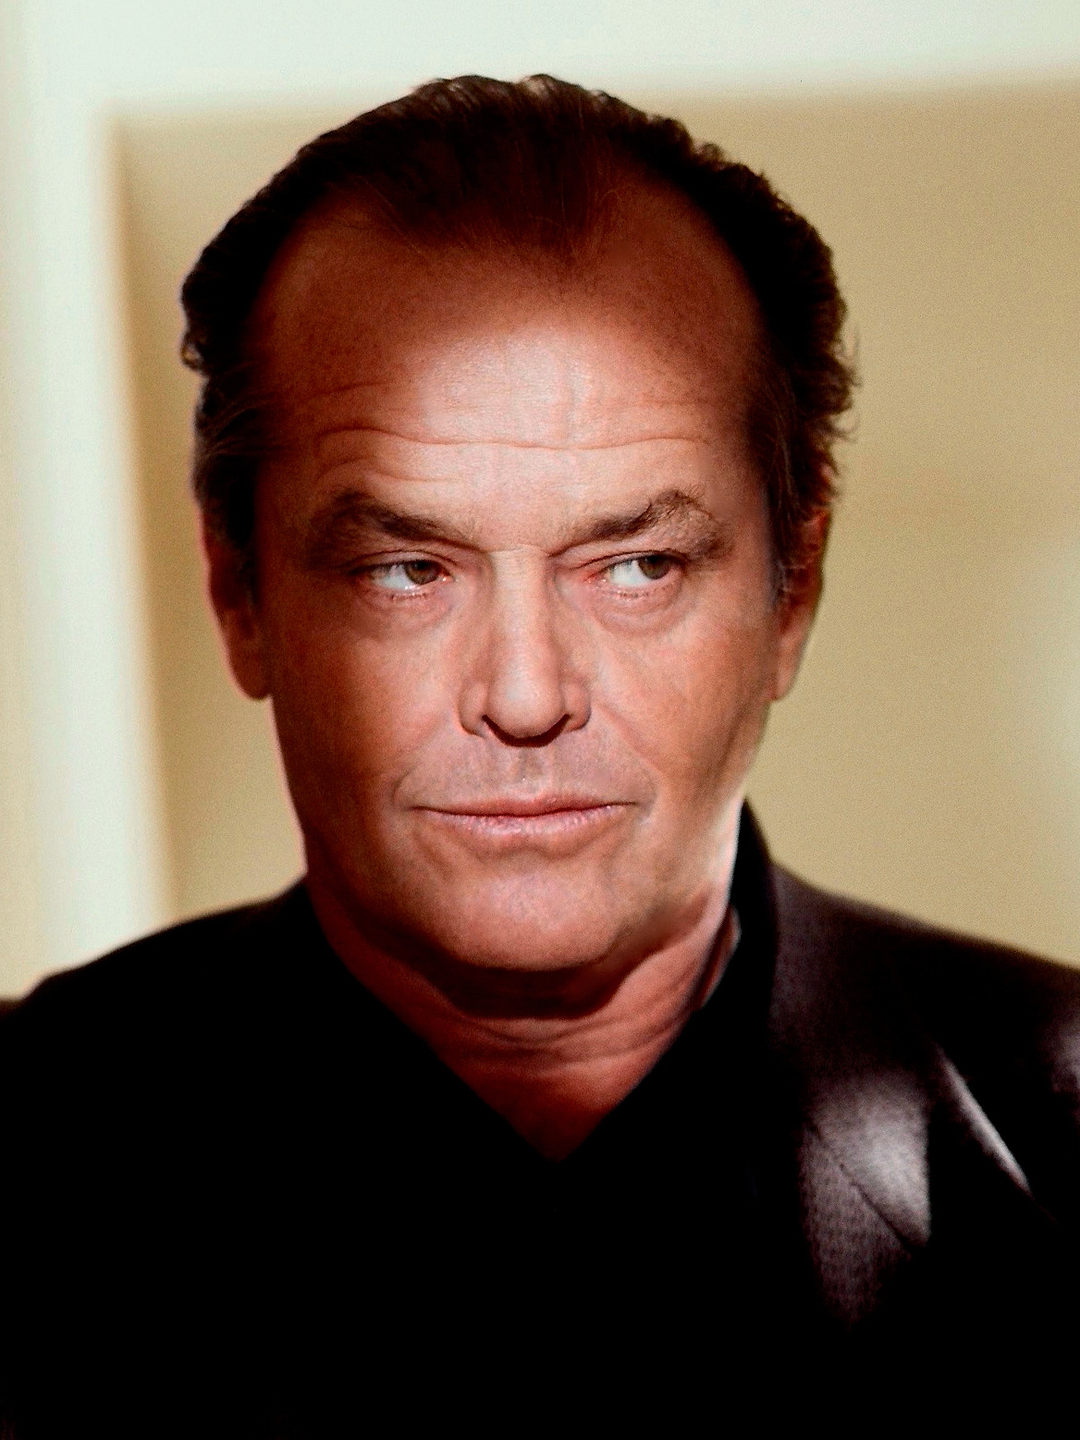 Jack Nicholson current look